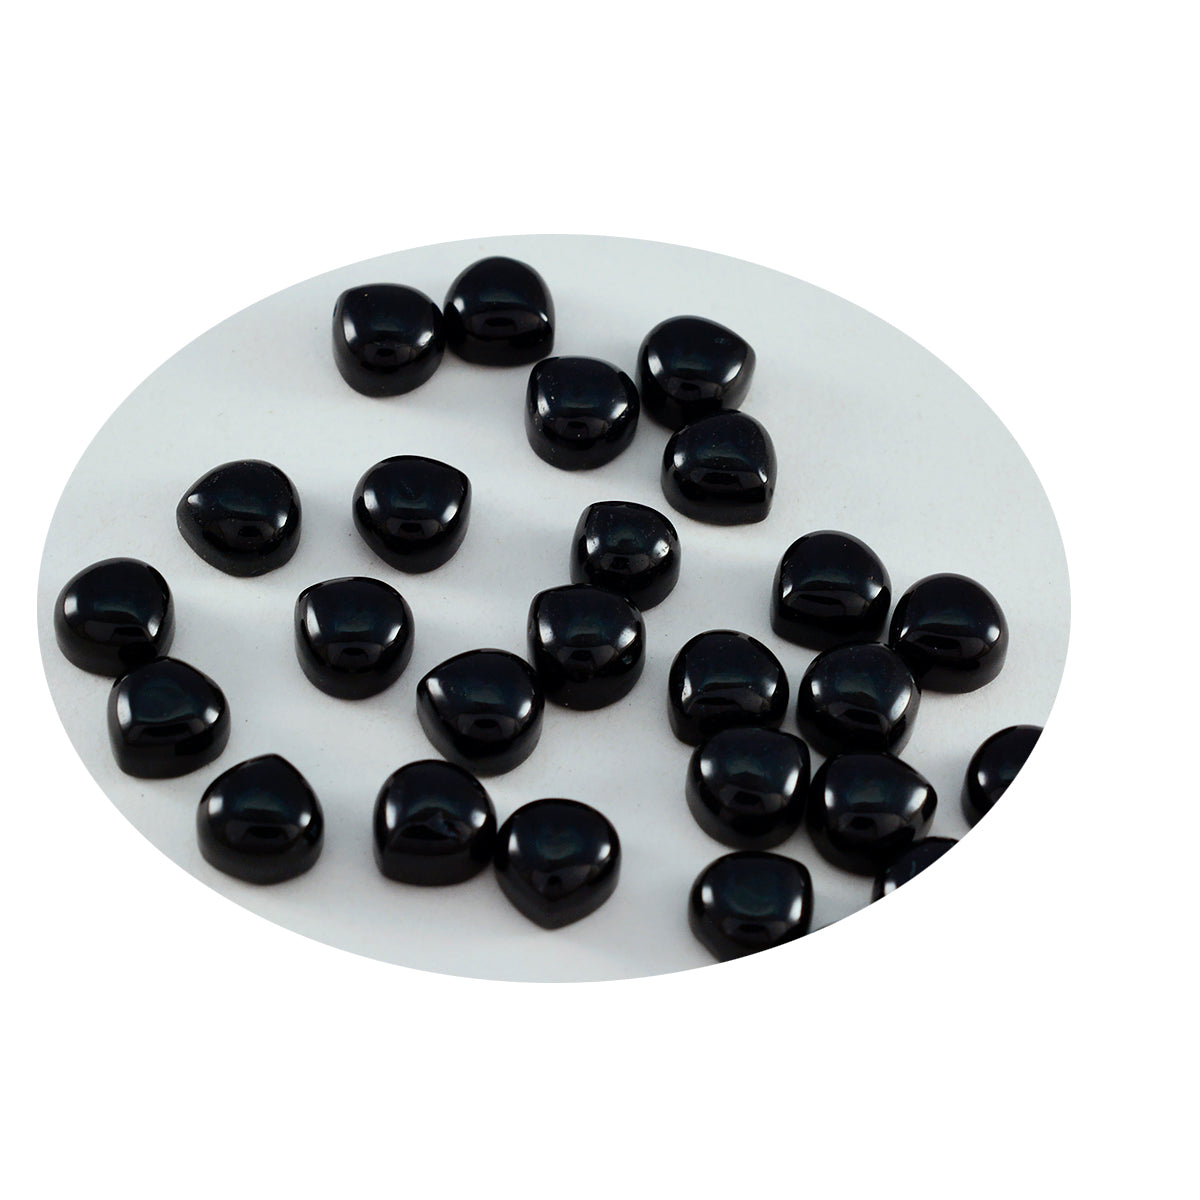 Riyogems 1PC Black Onyx Cabochon 4x4 mm hartvorm fantastische kwaliteit losse edelsteen